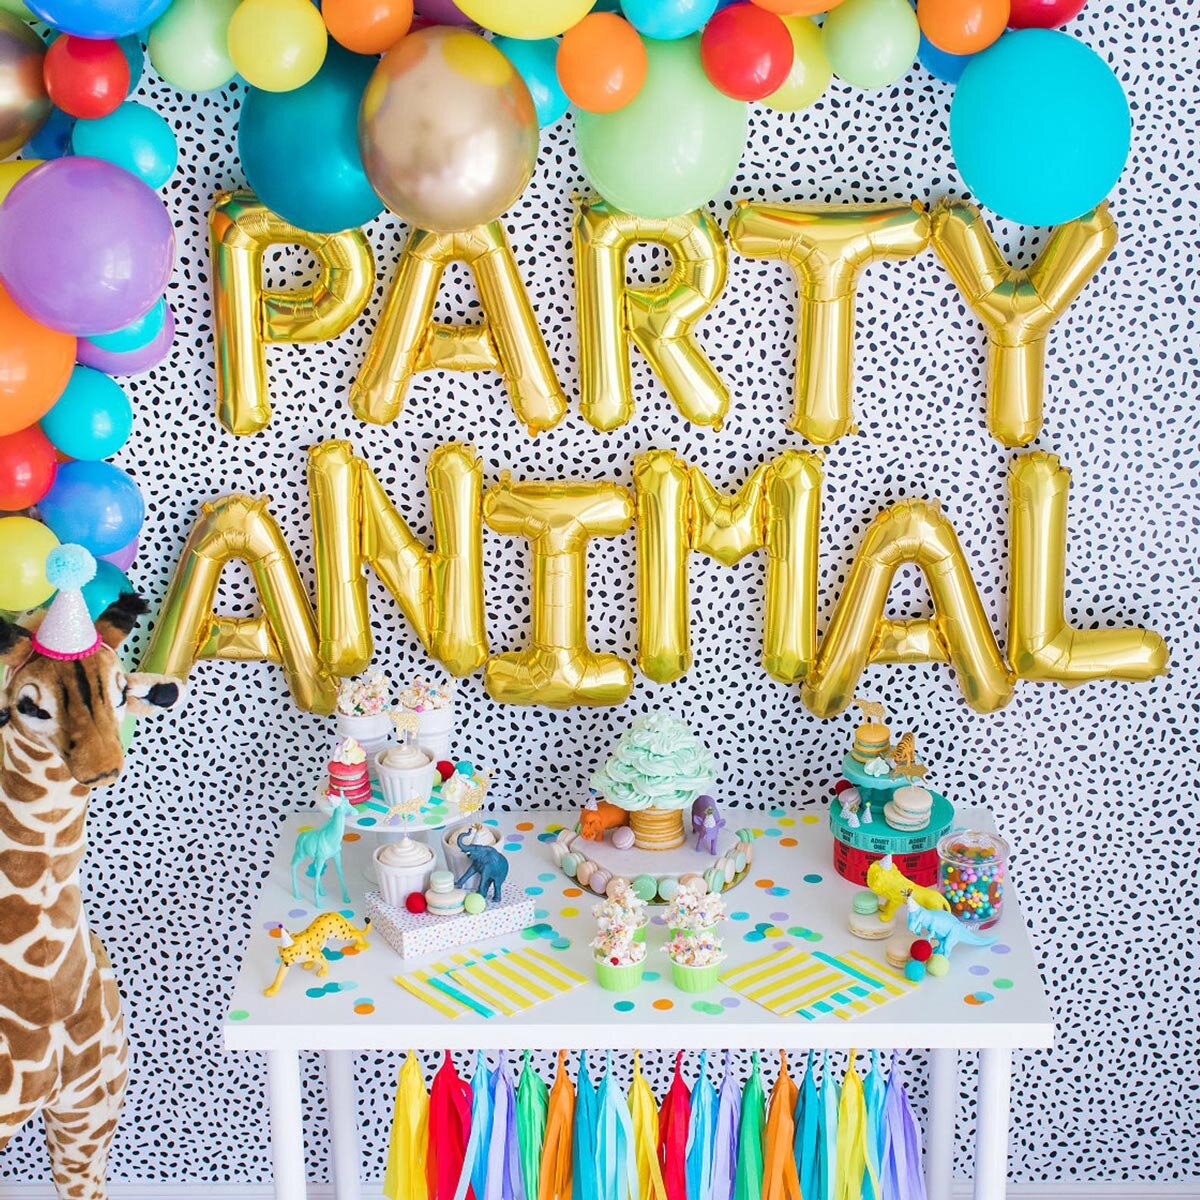 Party Decorations Safari Jungle Theme Birthday Children Animal Balloons Kids DIY